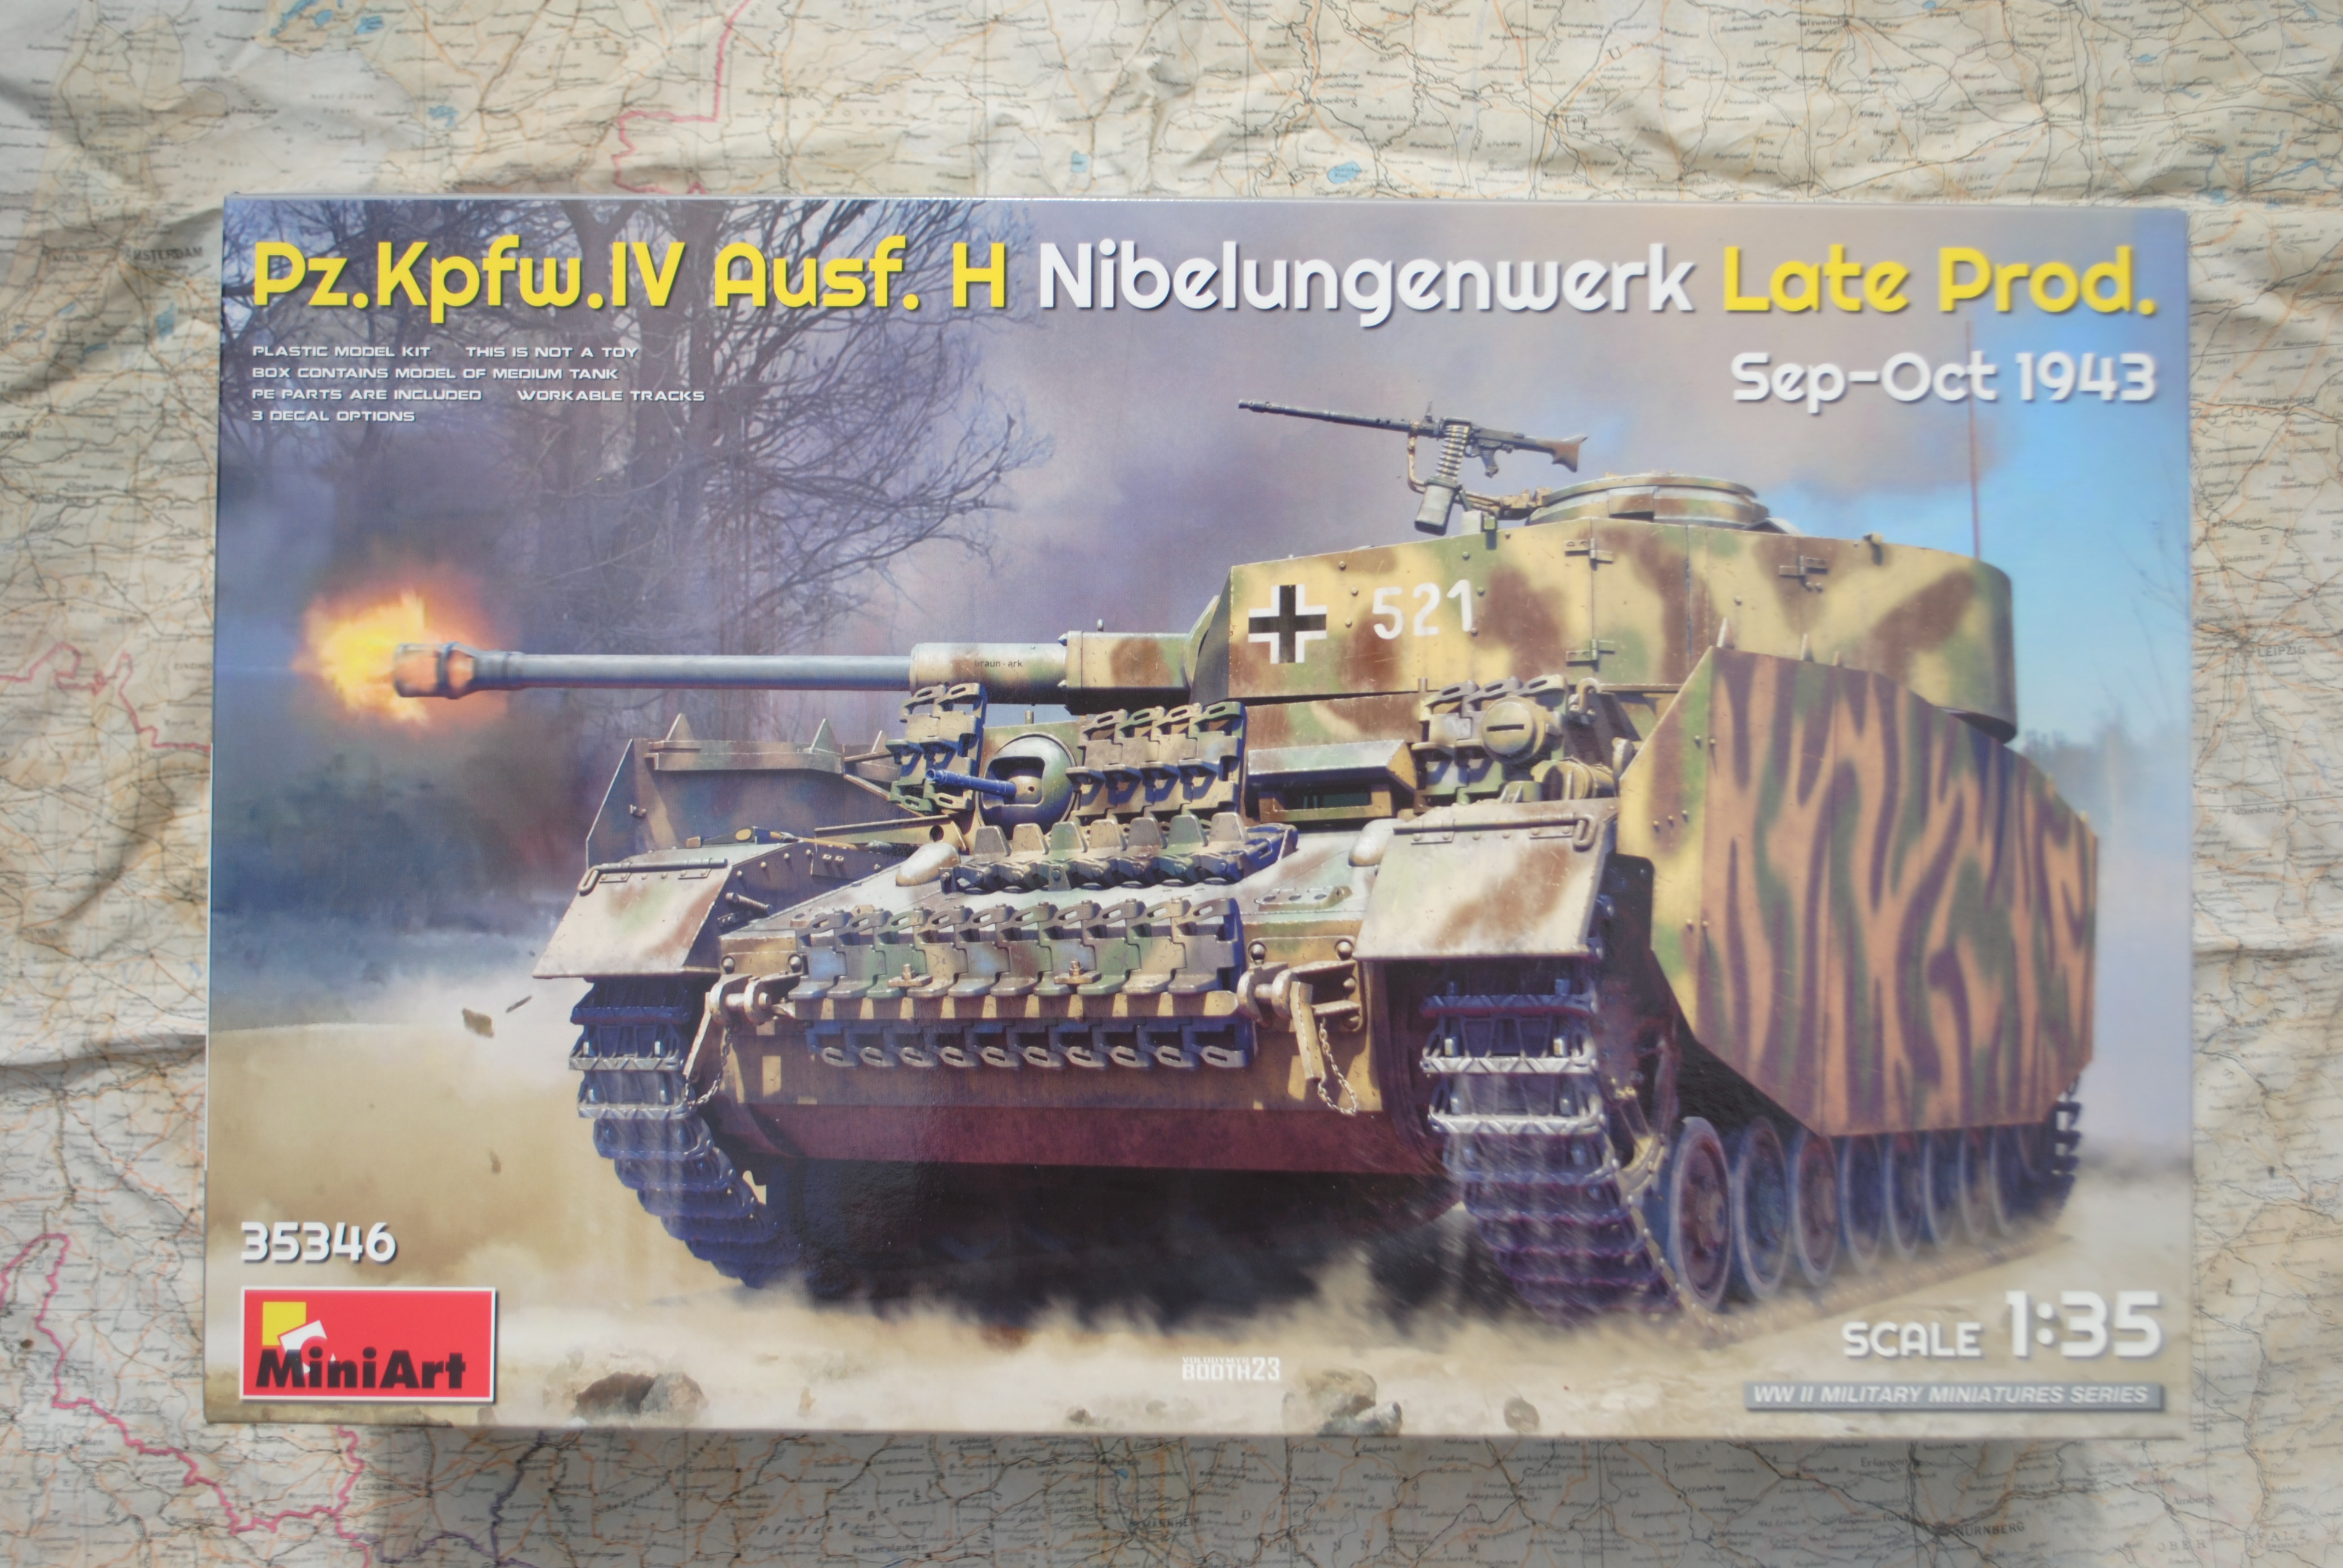 MiniArt 35346 Pz.Kpfw.IV Ausf. H Nibelungenwerk Late Prod. Sep-Oct 1943